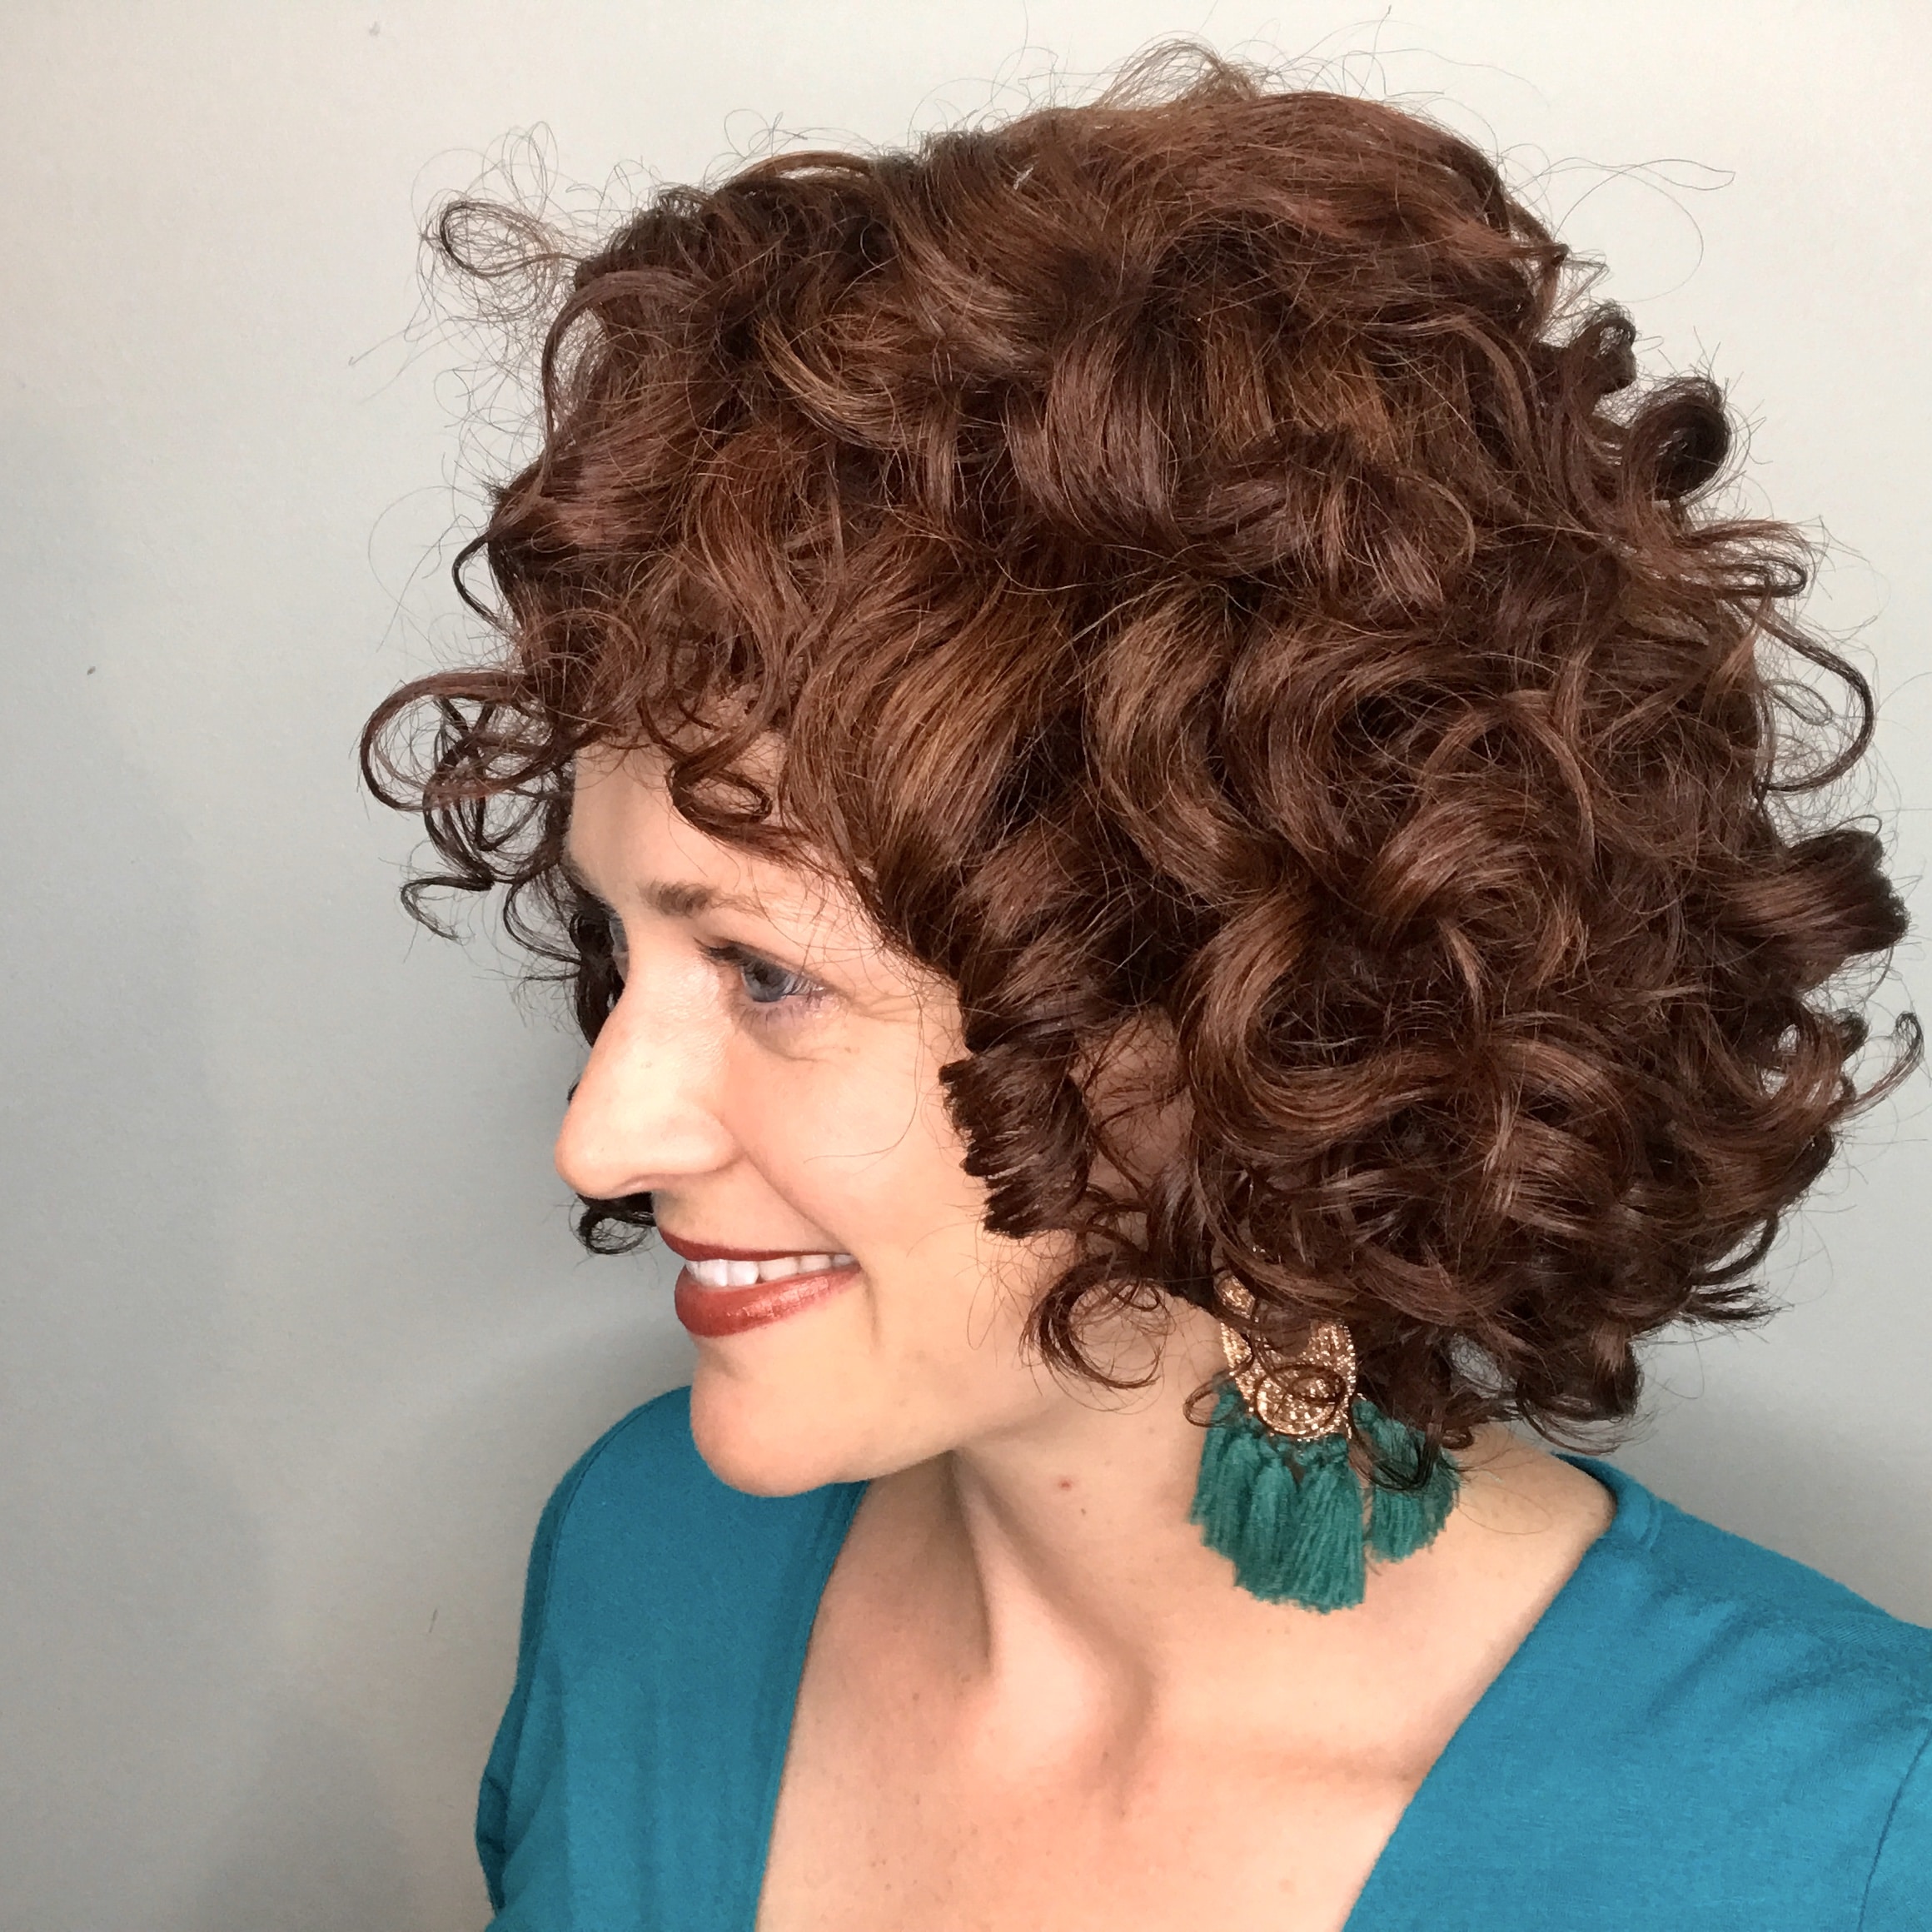 DIY Natural Gelatin Hair Gel - Frugal and Easy! – My Merry Messy Life